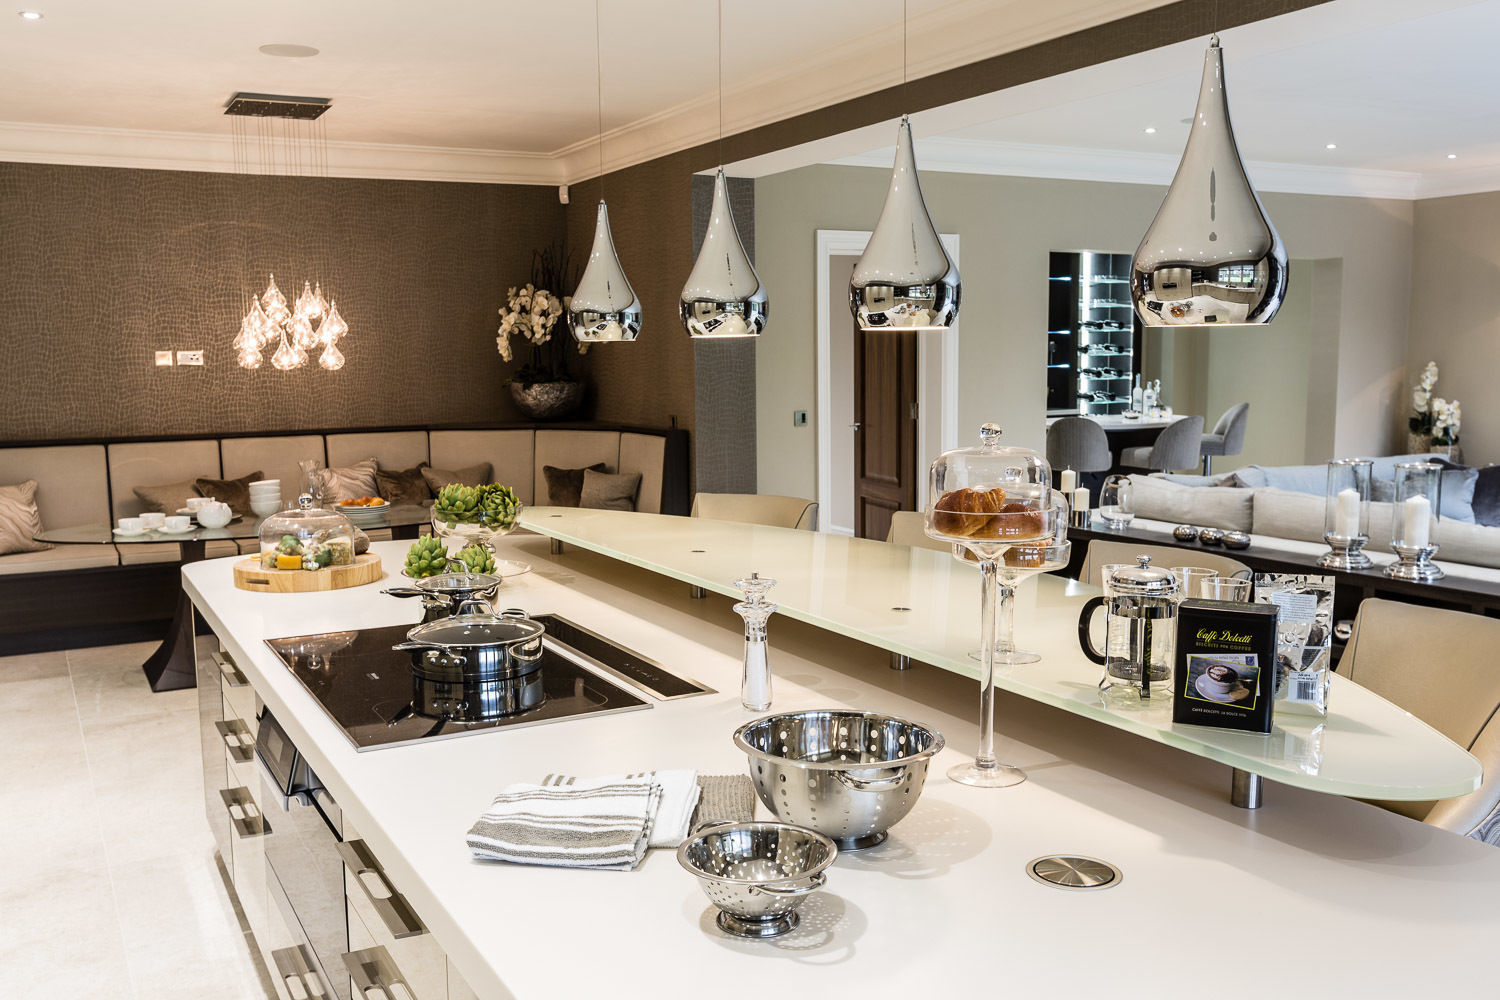 Kitchen with Breakfast Bar Luke Cartledge Photography Cucina in stile classico